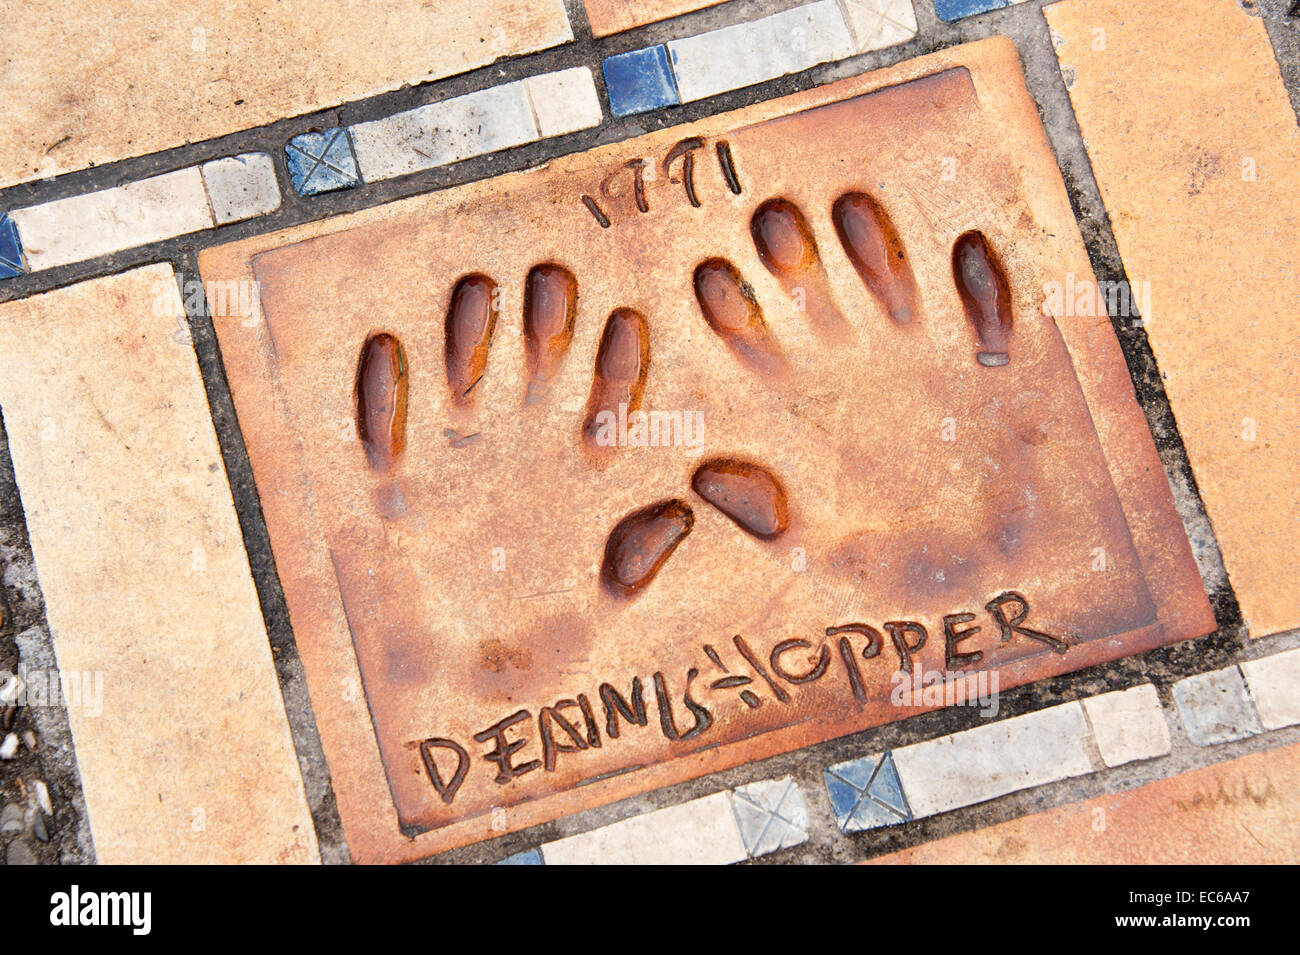 Dennis Hopper stampe a mano, Cannes, Francia Foto Stock